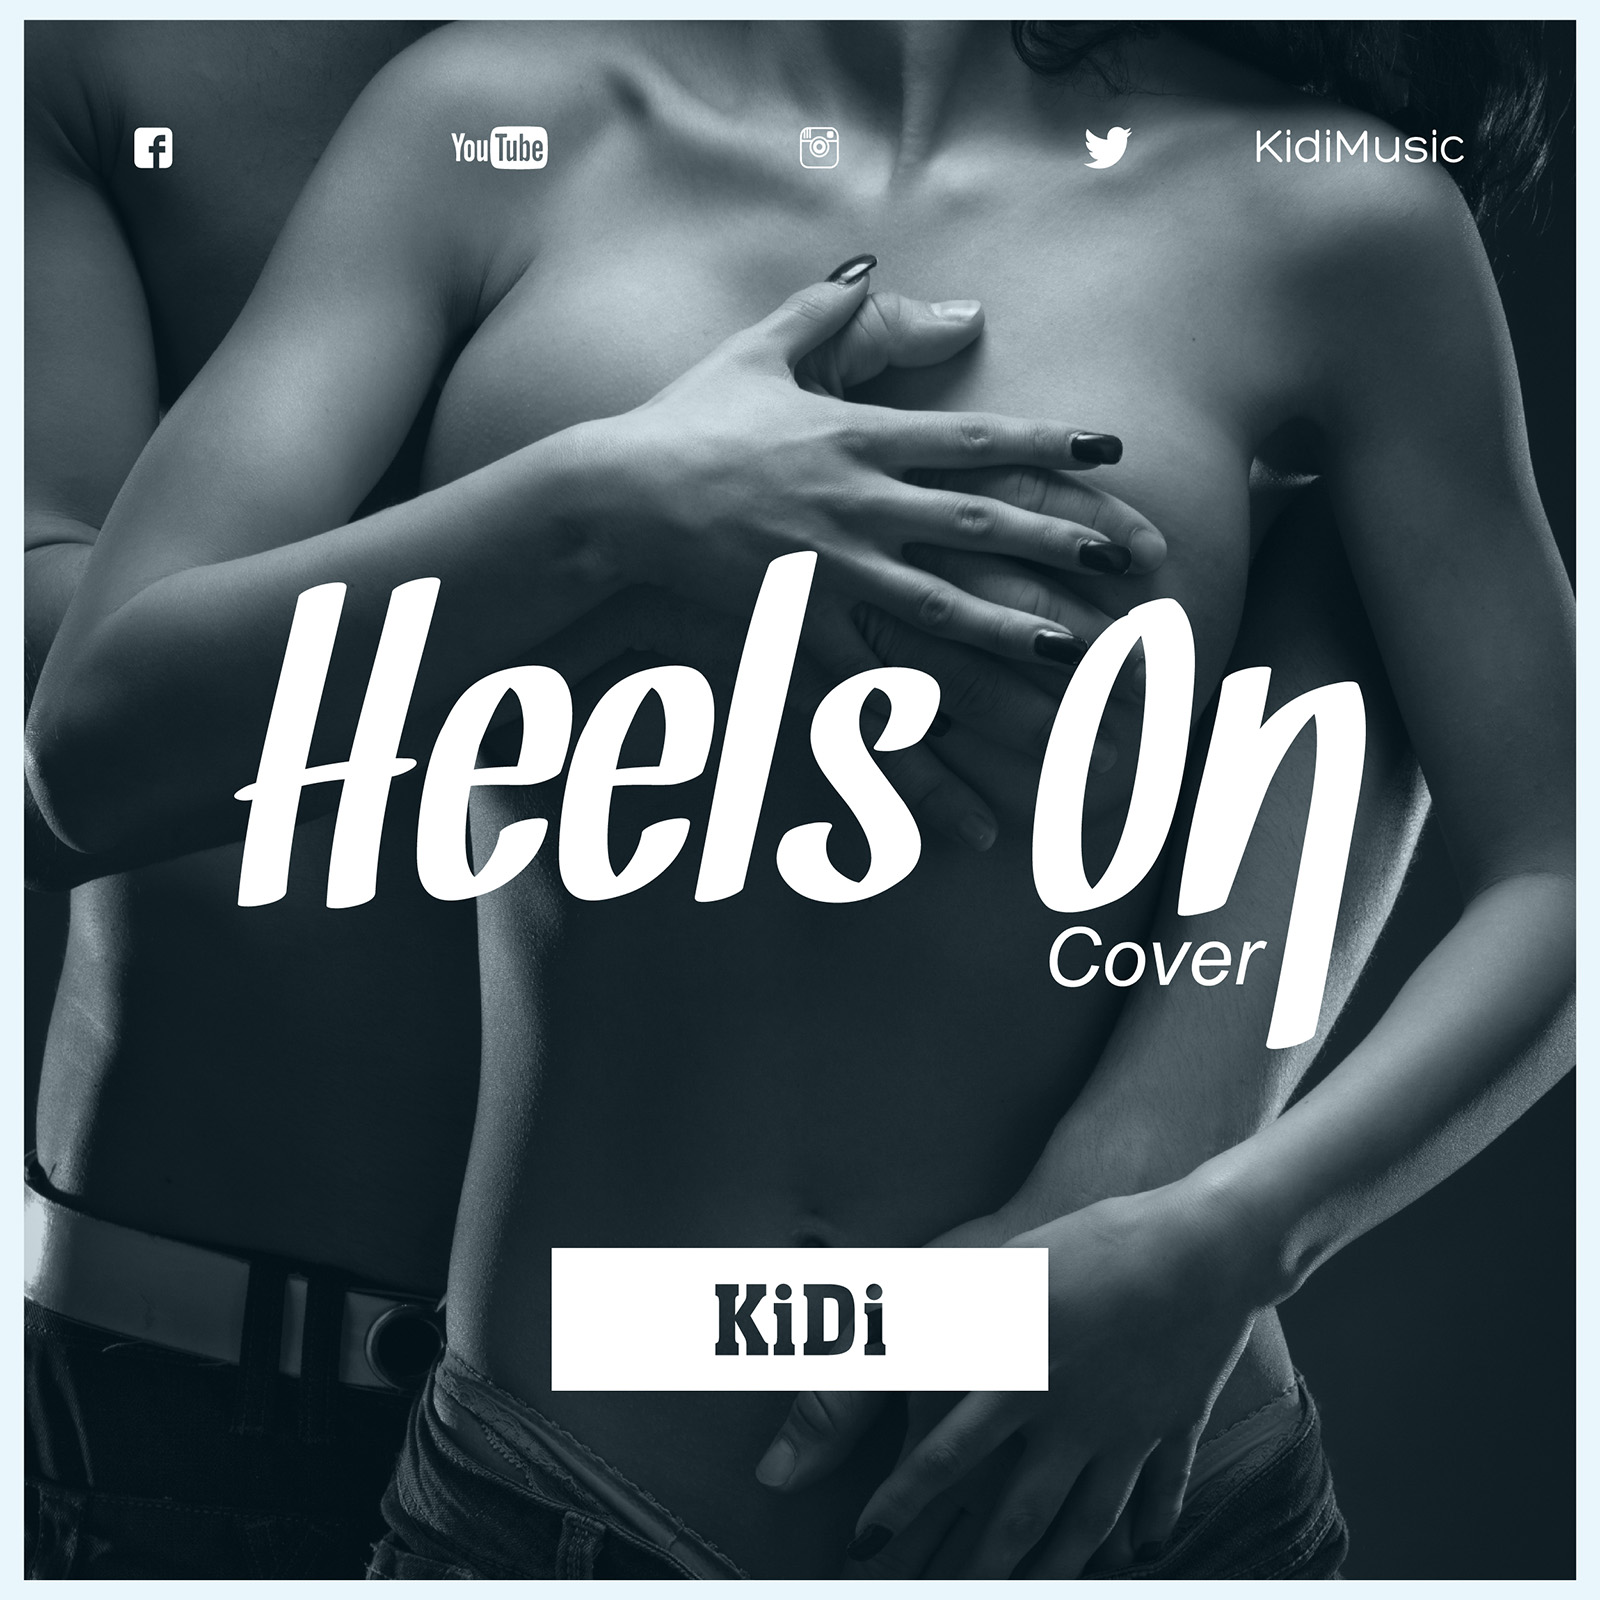 Heels On (Cover) by KiDi